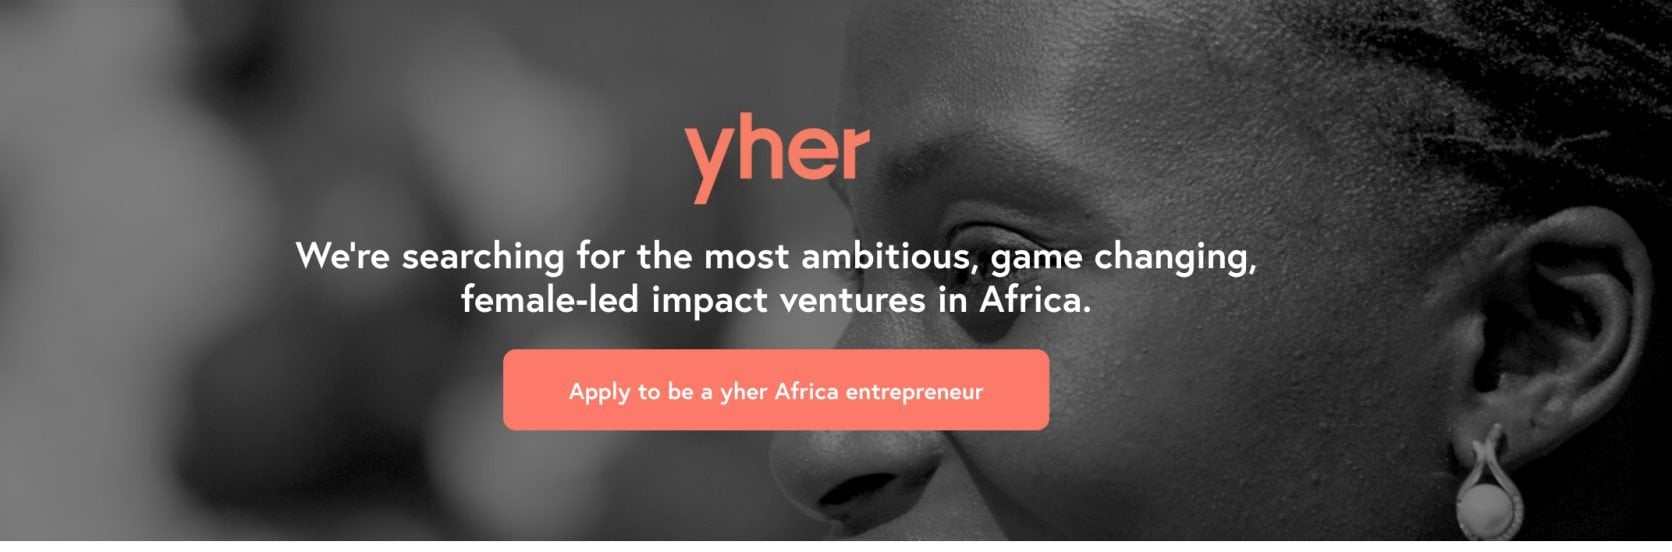 YGAP yher Africa 2019 Accelerator Program